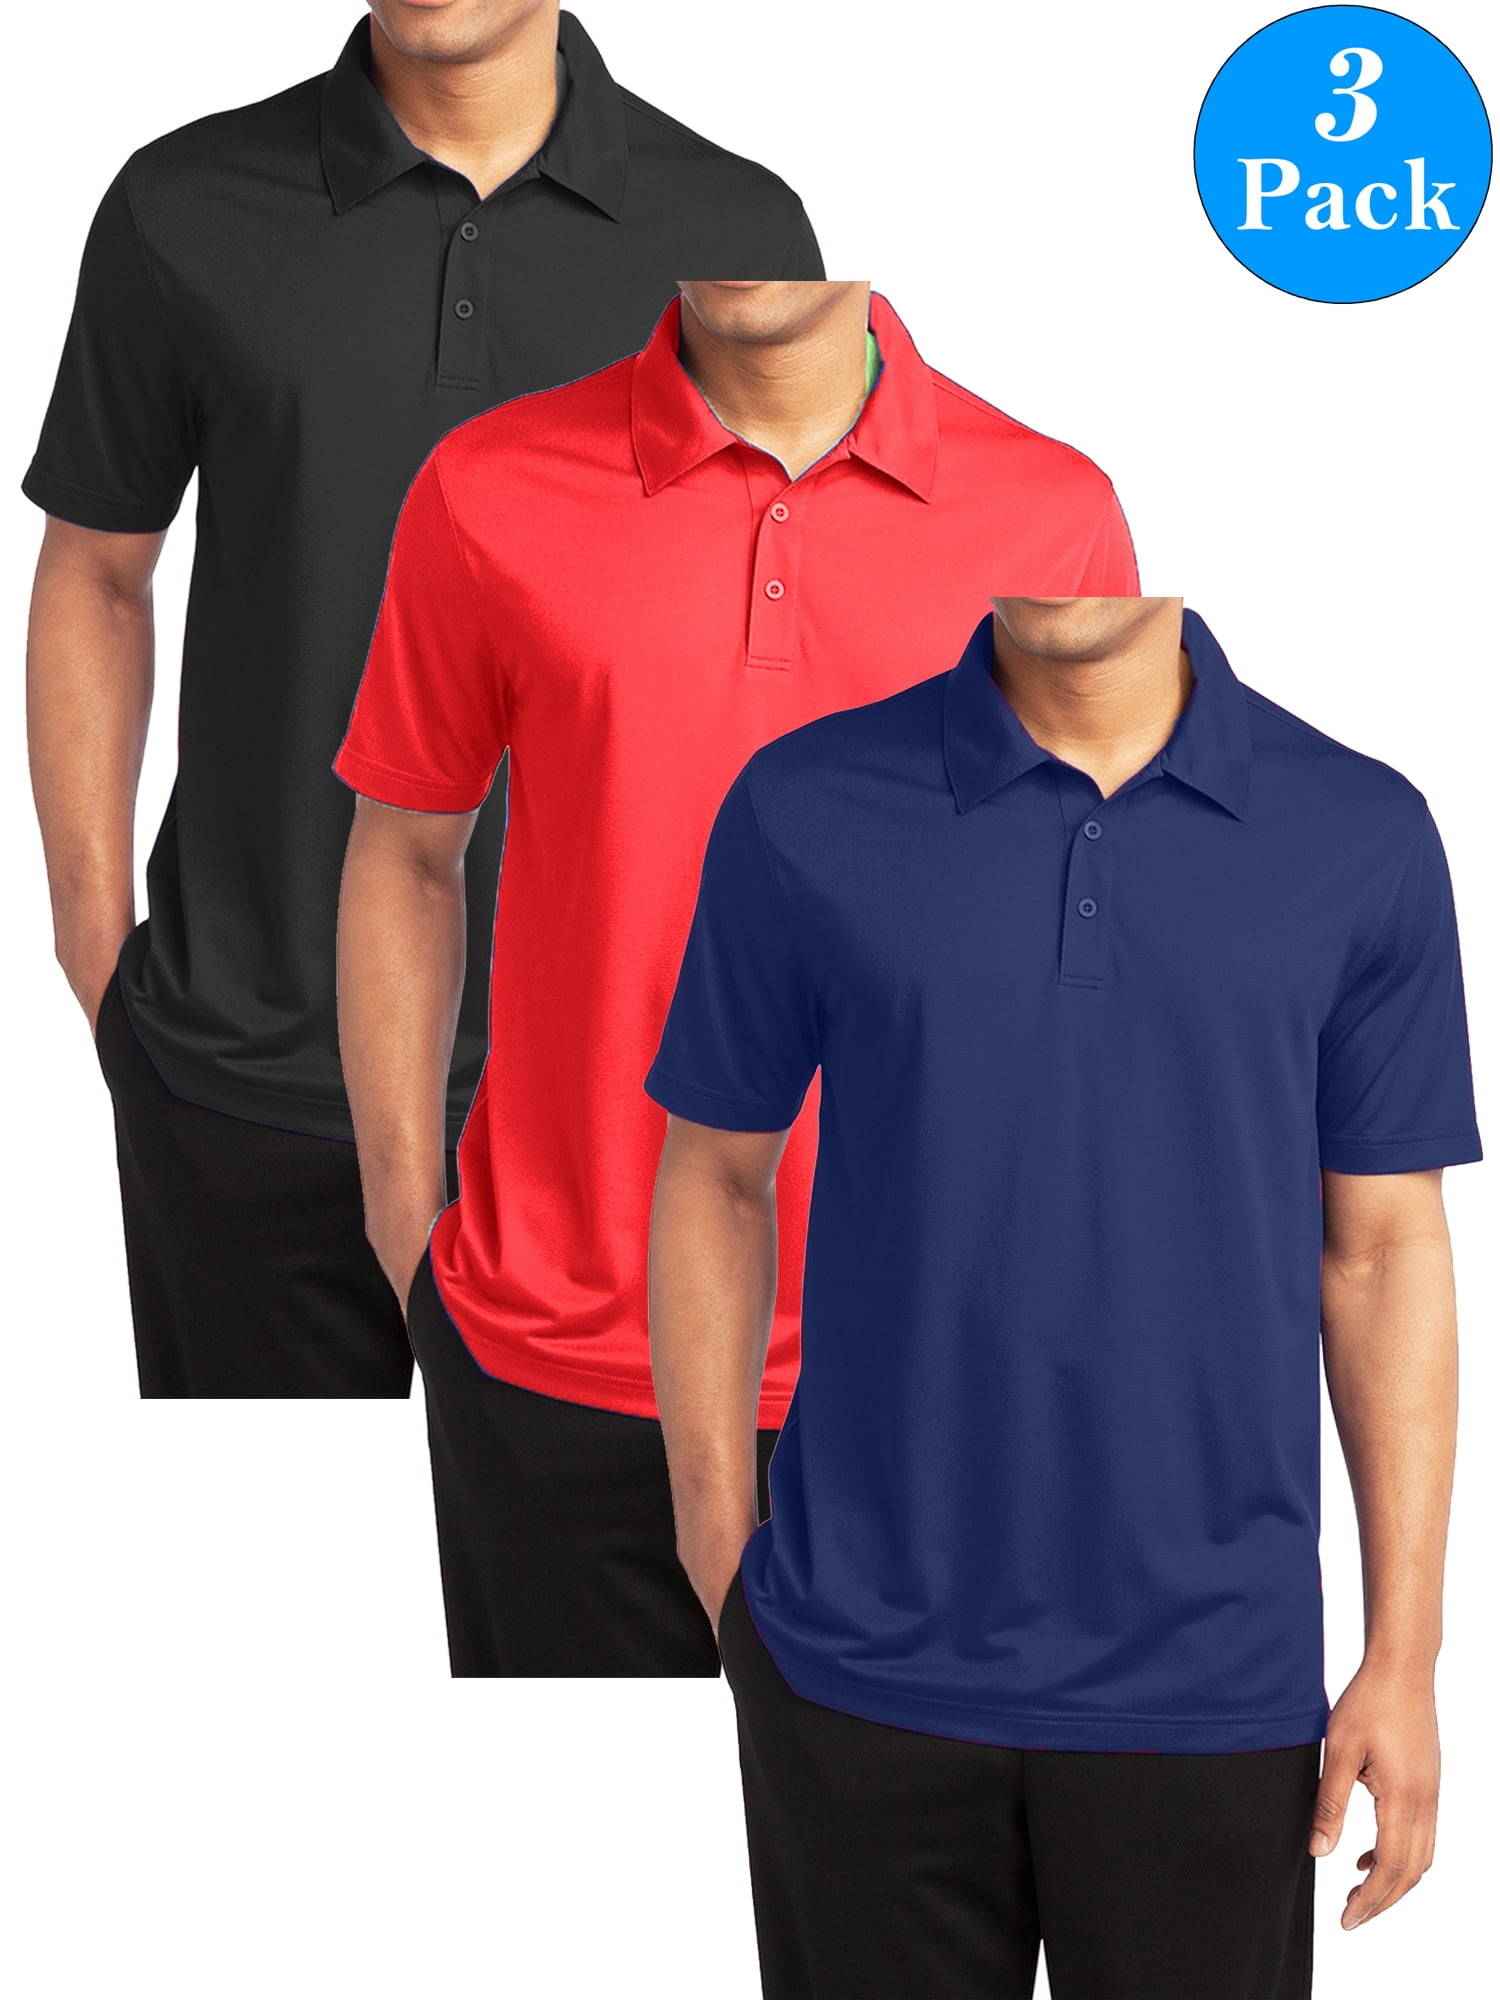 GBH - Men's Dry Fit Moisture-Wicking Polo Shirt (3-Pack) - Walmart.com